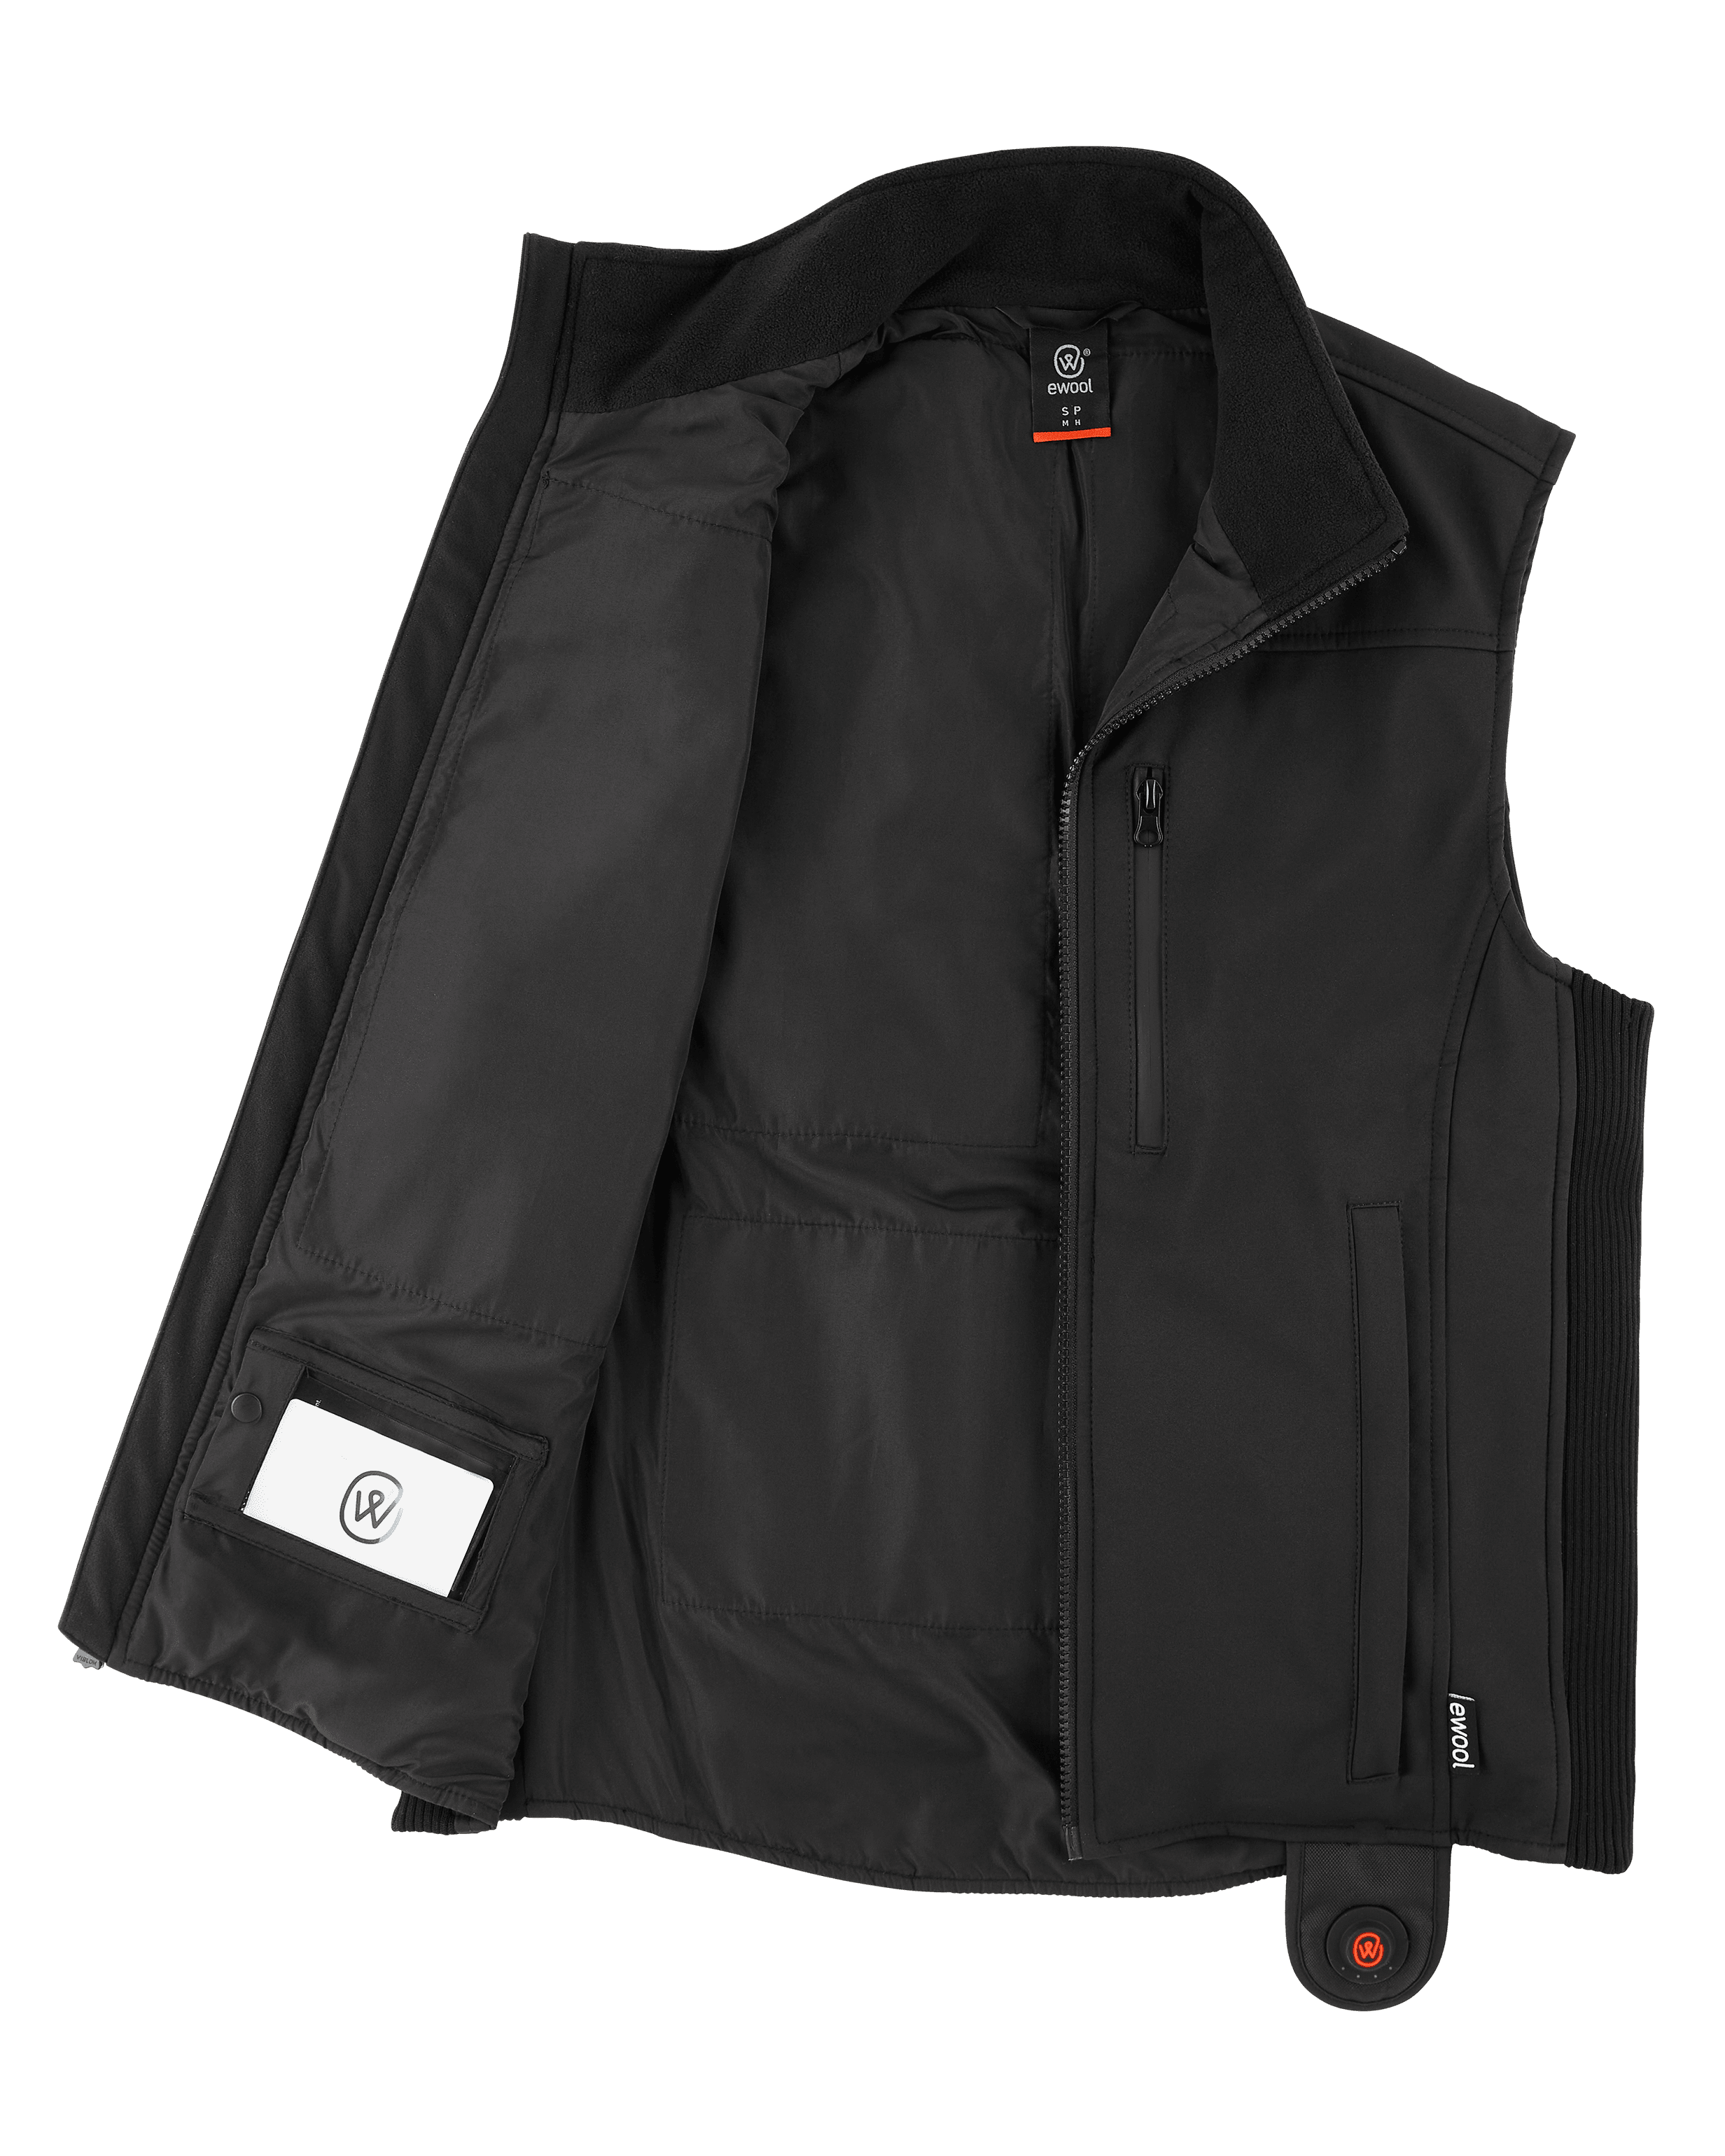 PRO+ Heated Vest for Men (Open Box)